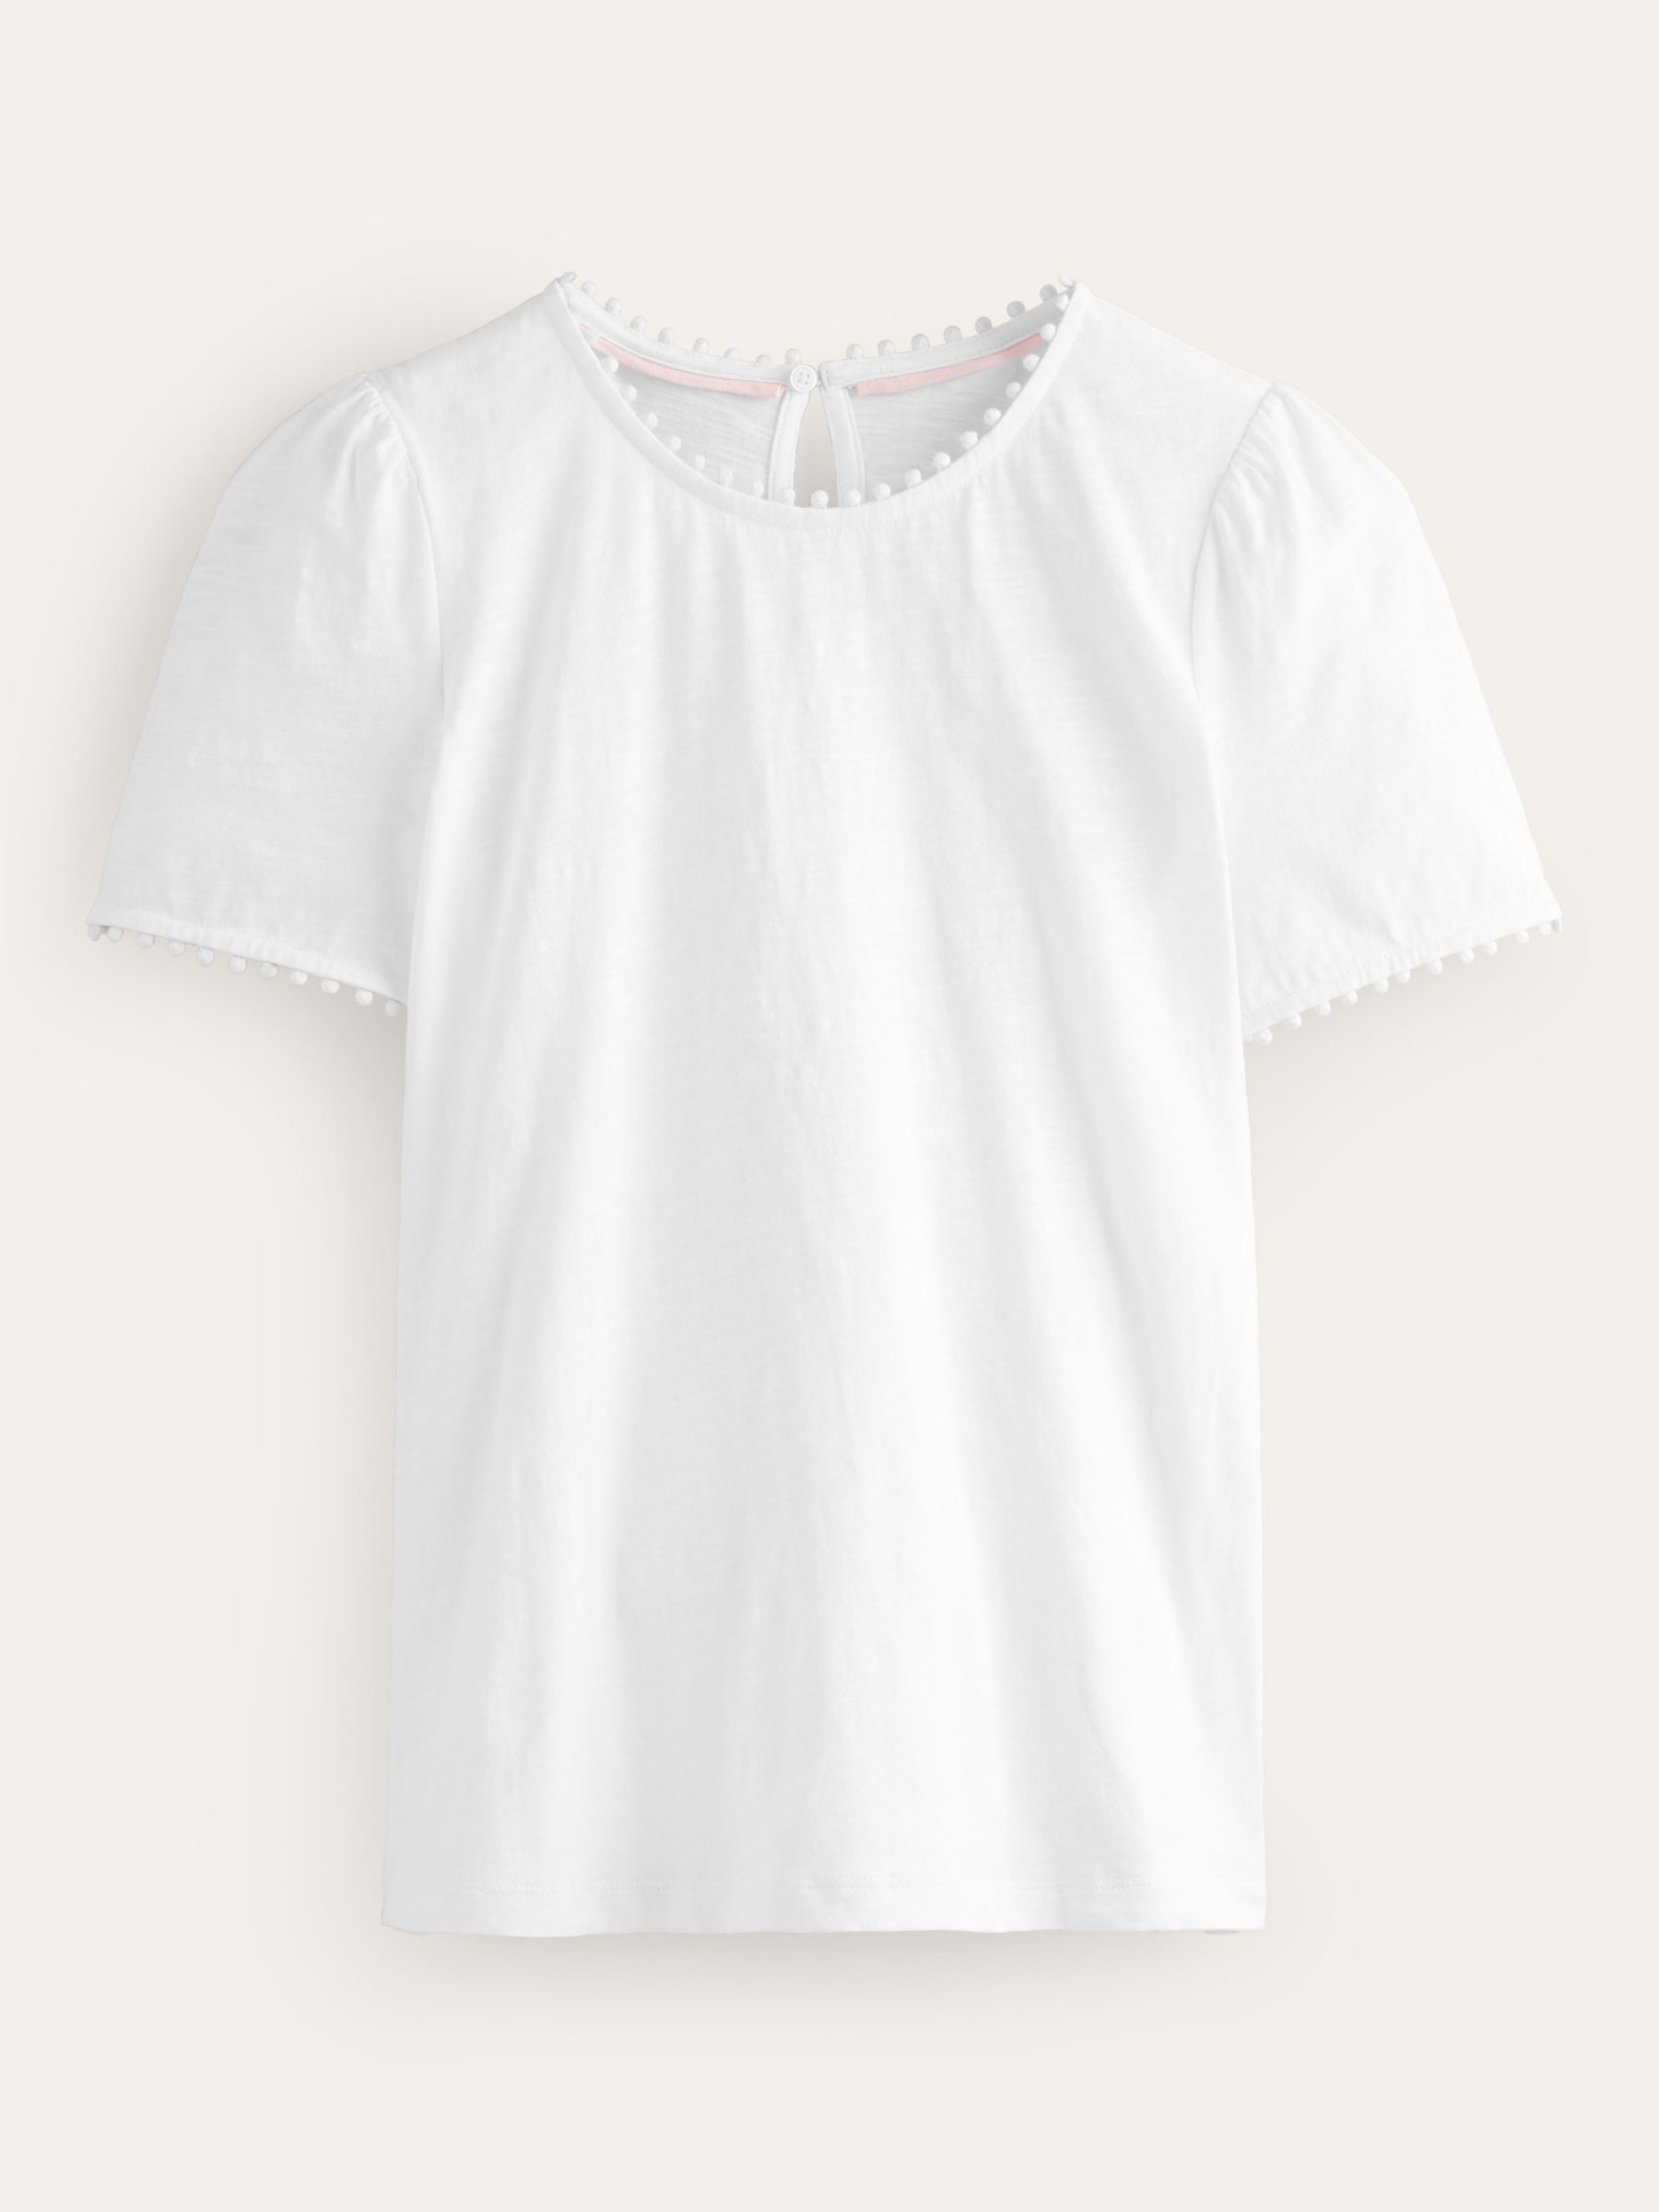 Boden Ali Jersey T-Shirt, White, 16